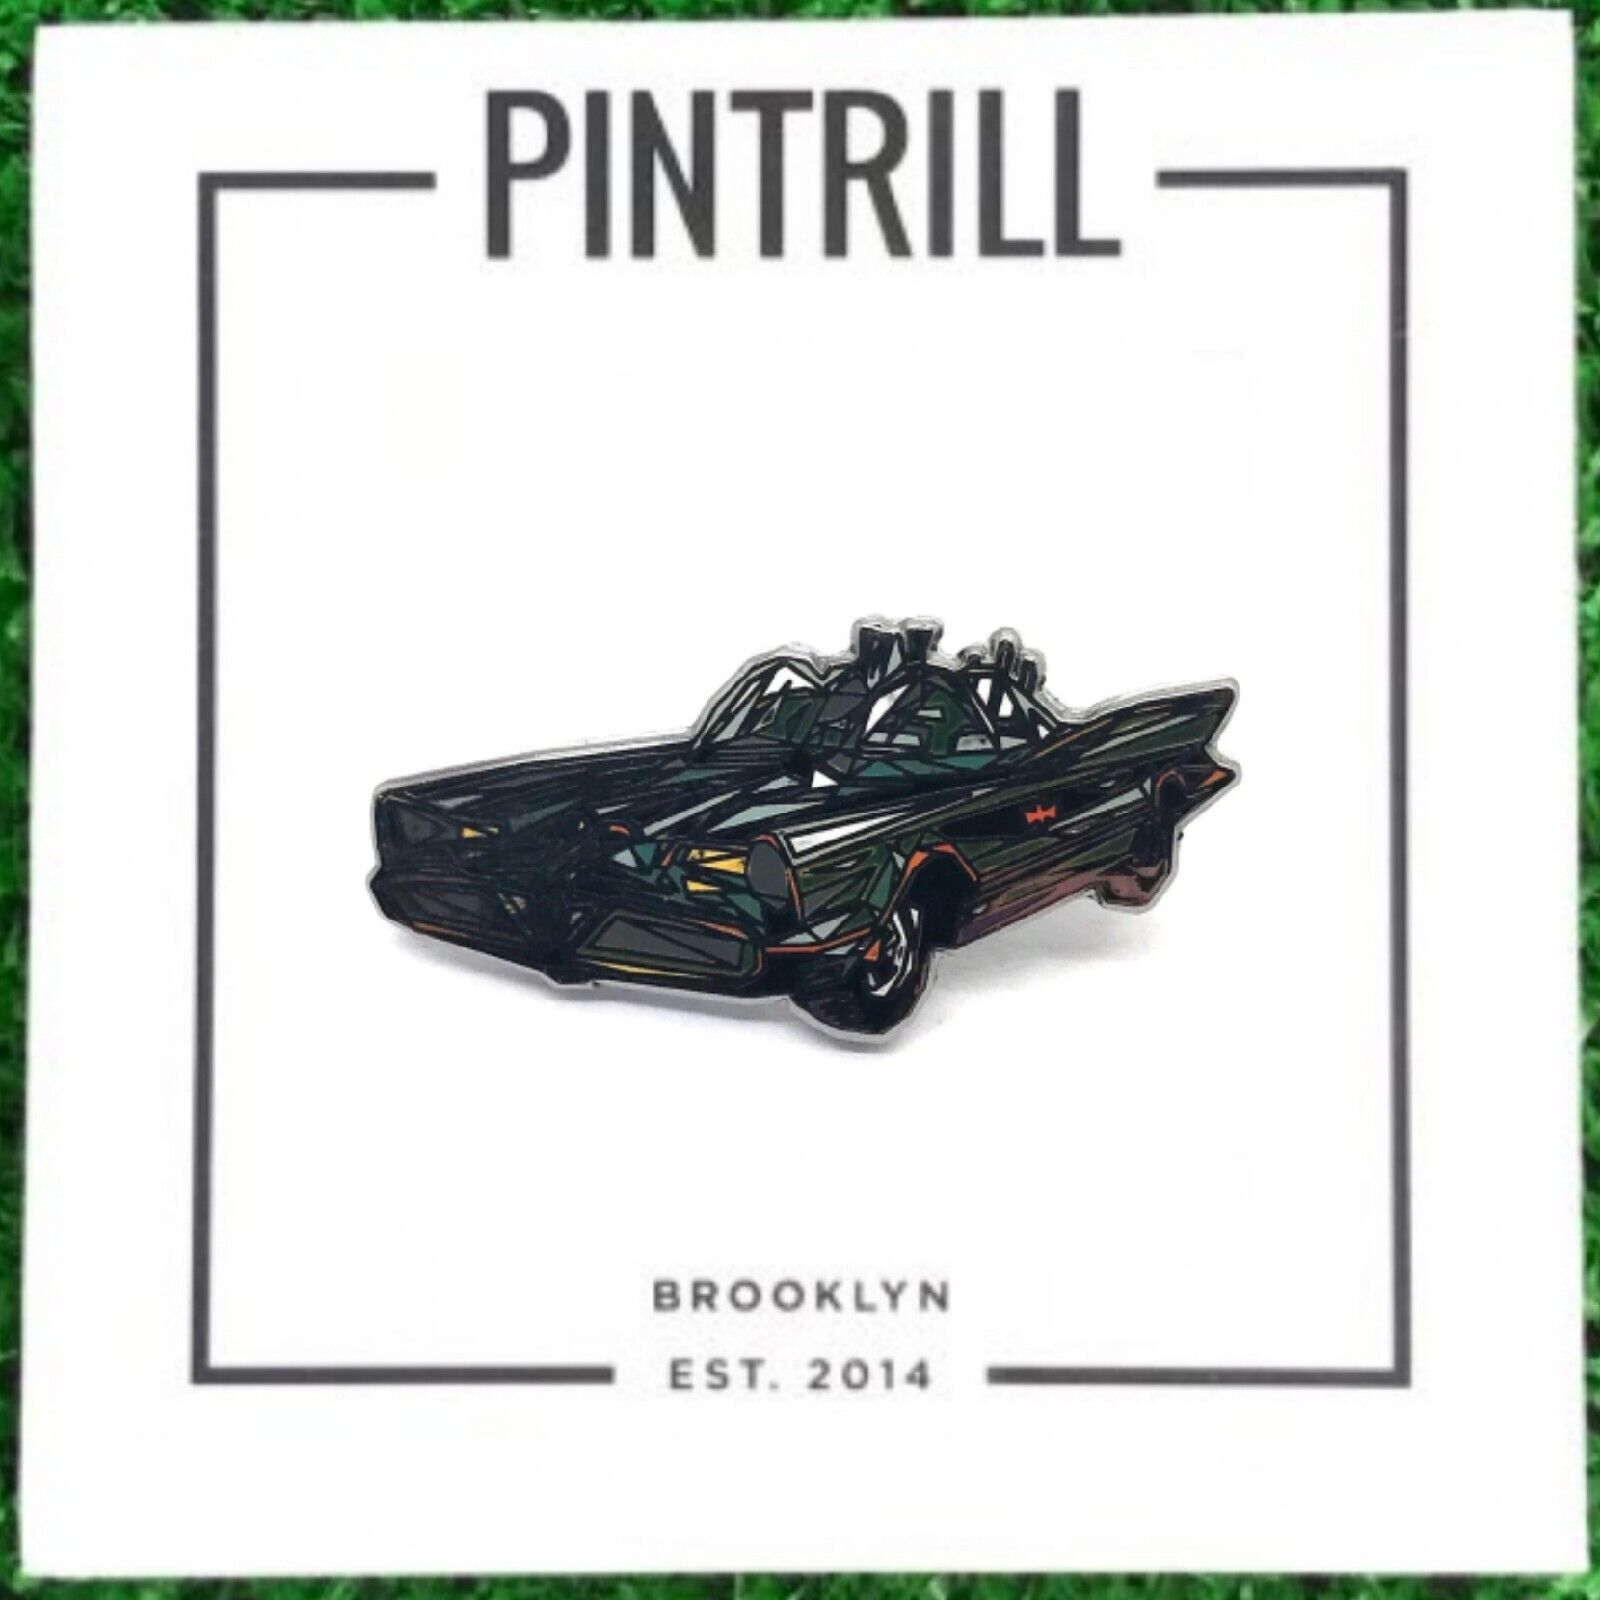 ⚡RARE⚡ PINTRILL x NATUREL Batman Batmobile Pin *BRAND NEW * Batman Pin  🦇 🏎